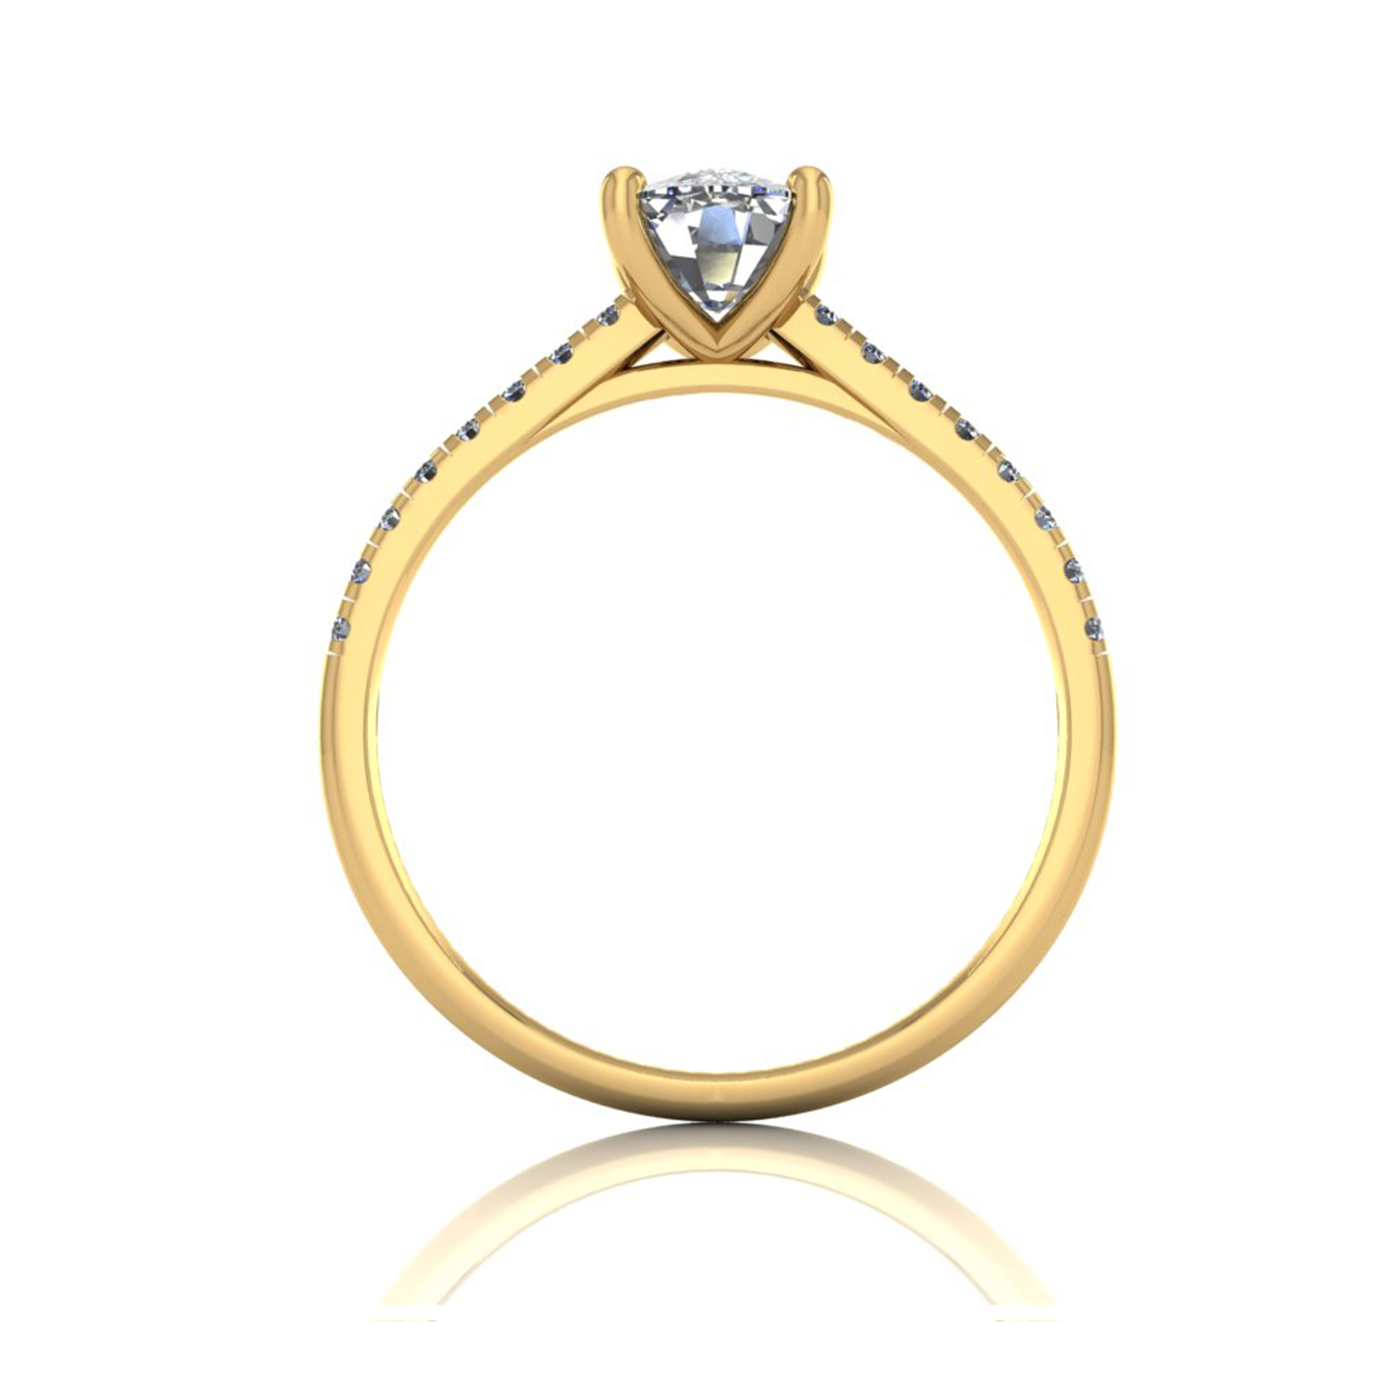 18k yellow gold  4 prongs cushion cut diamond engagement ring with whisper thin pavÉ set band